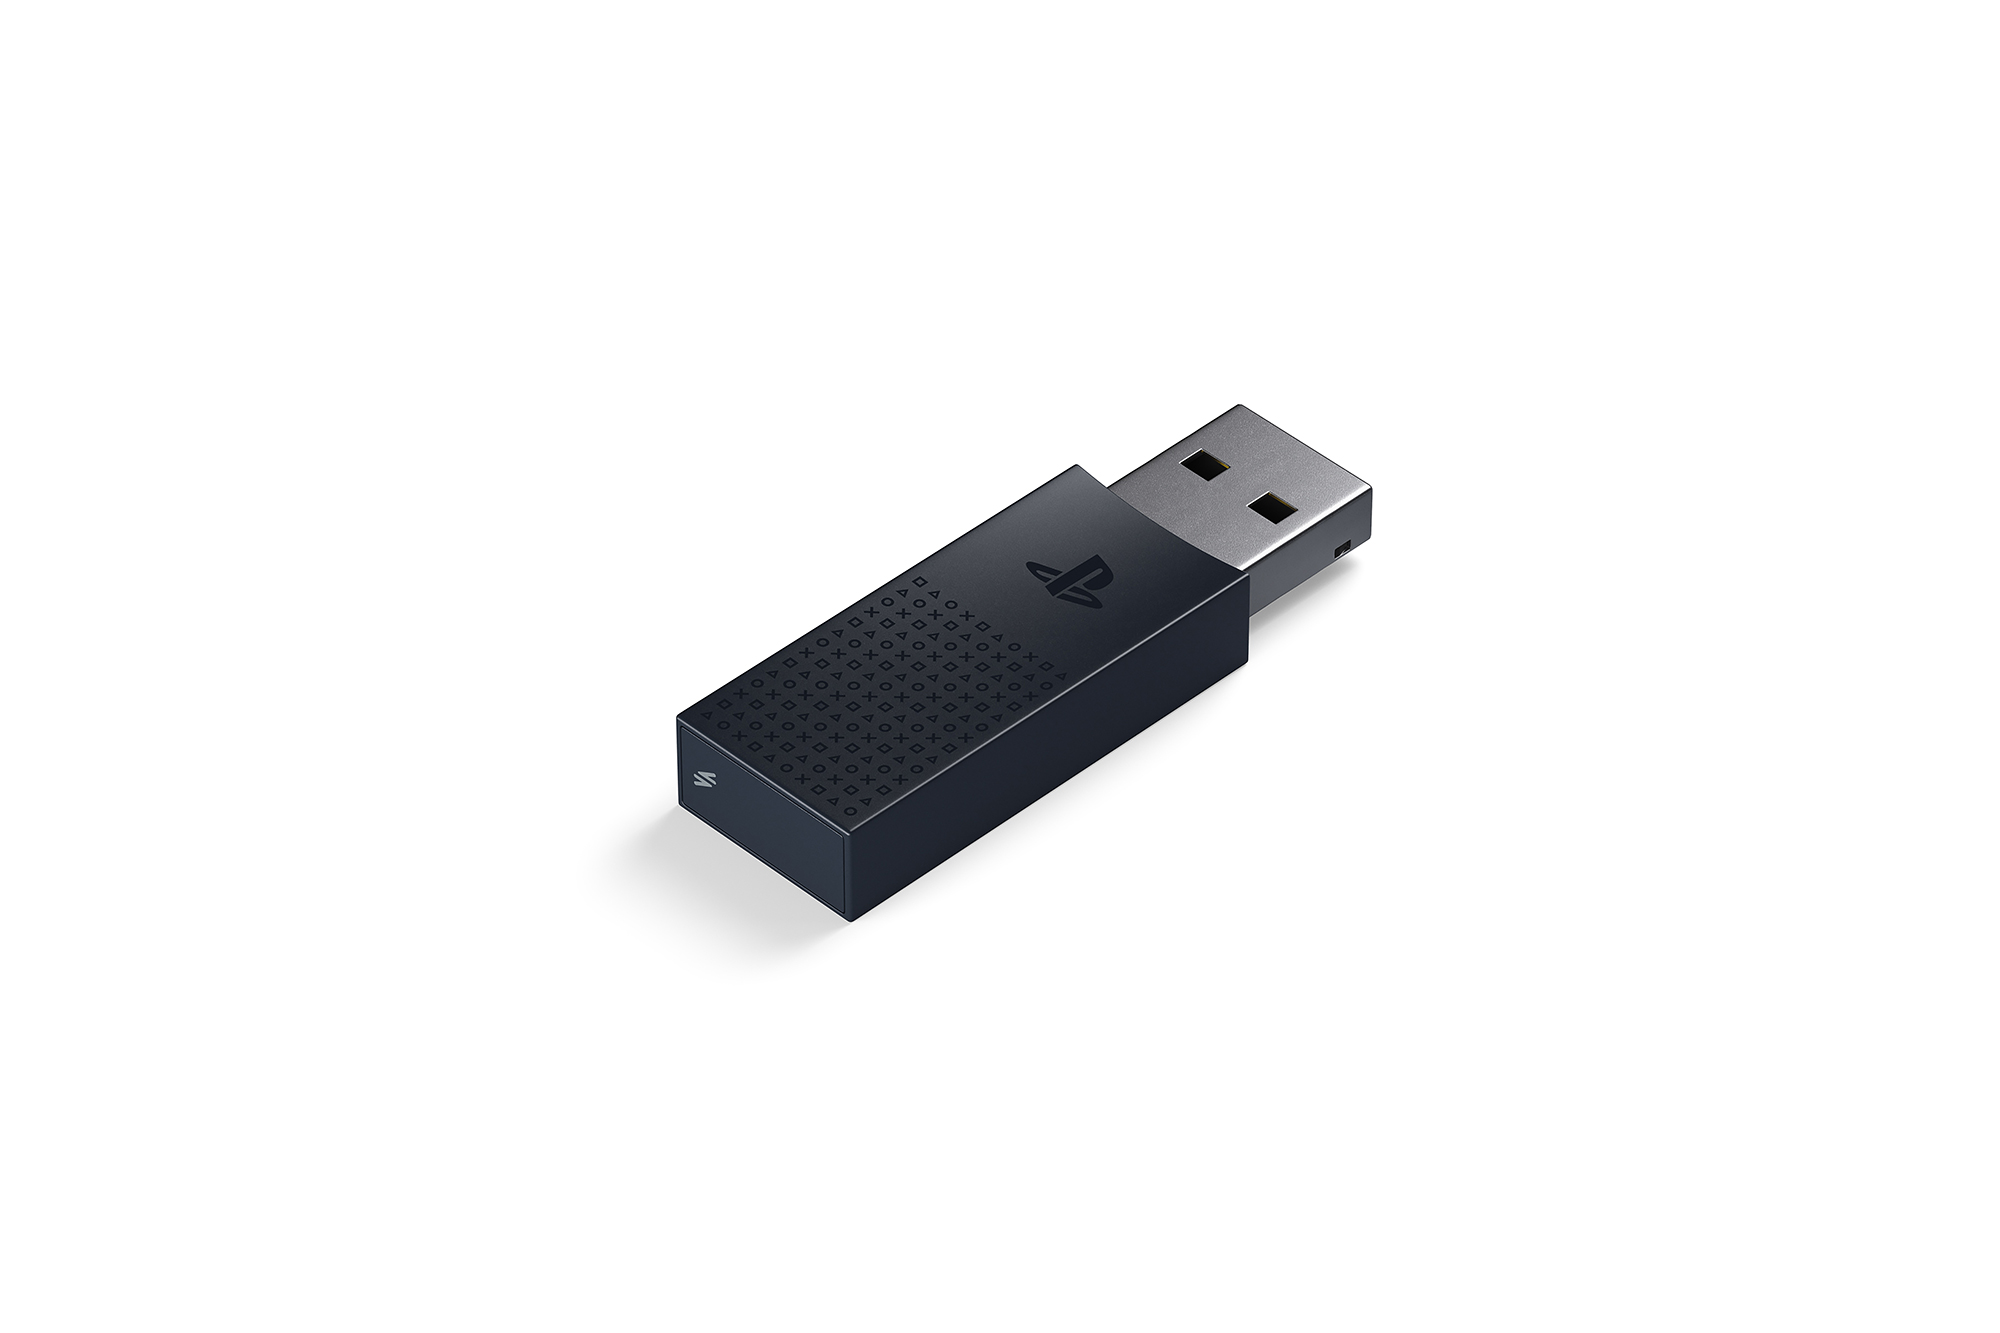 PlayStation Link USB 轉換器斜放圖式